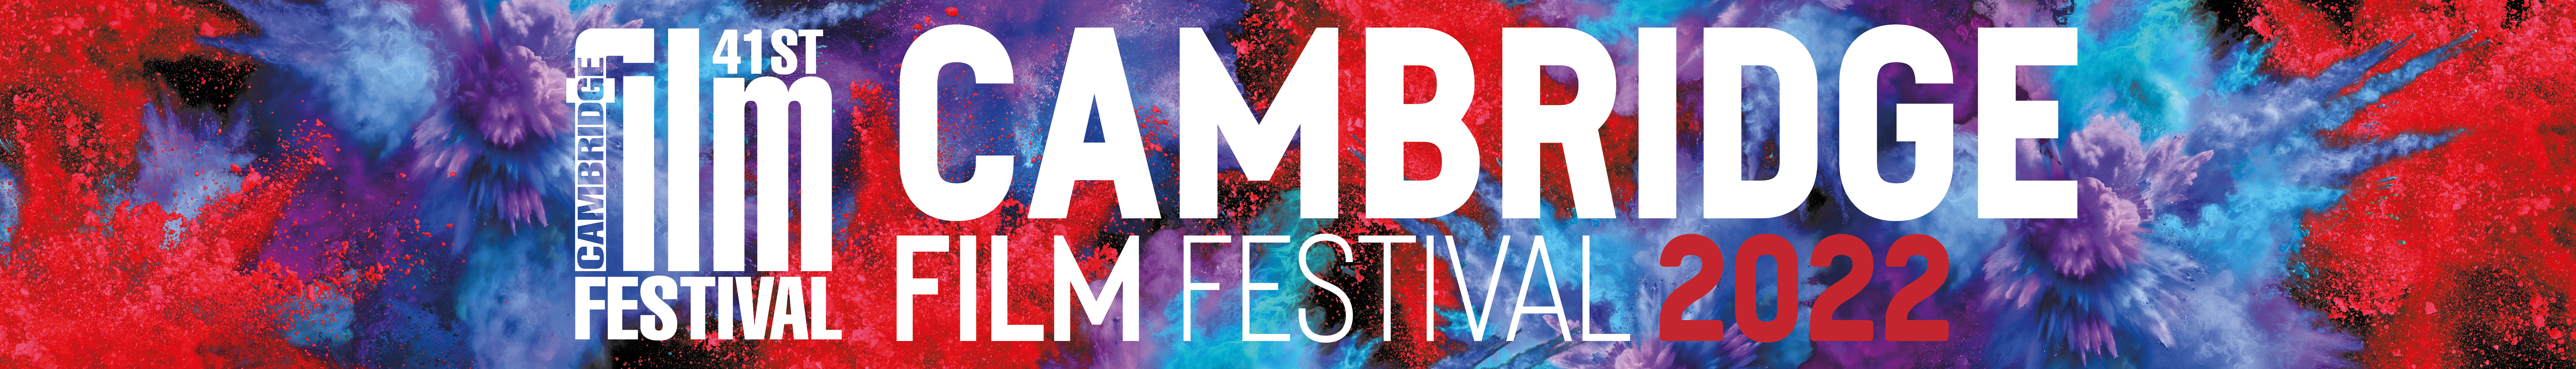 Cambridge Film Festival at Home